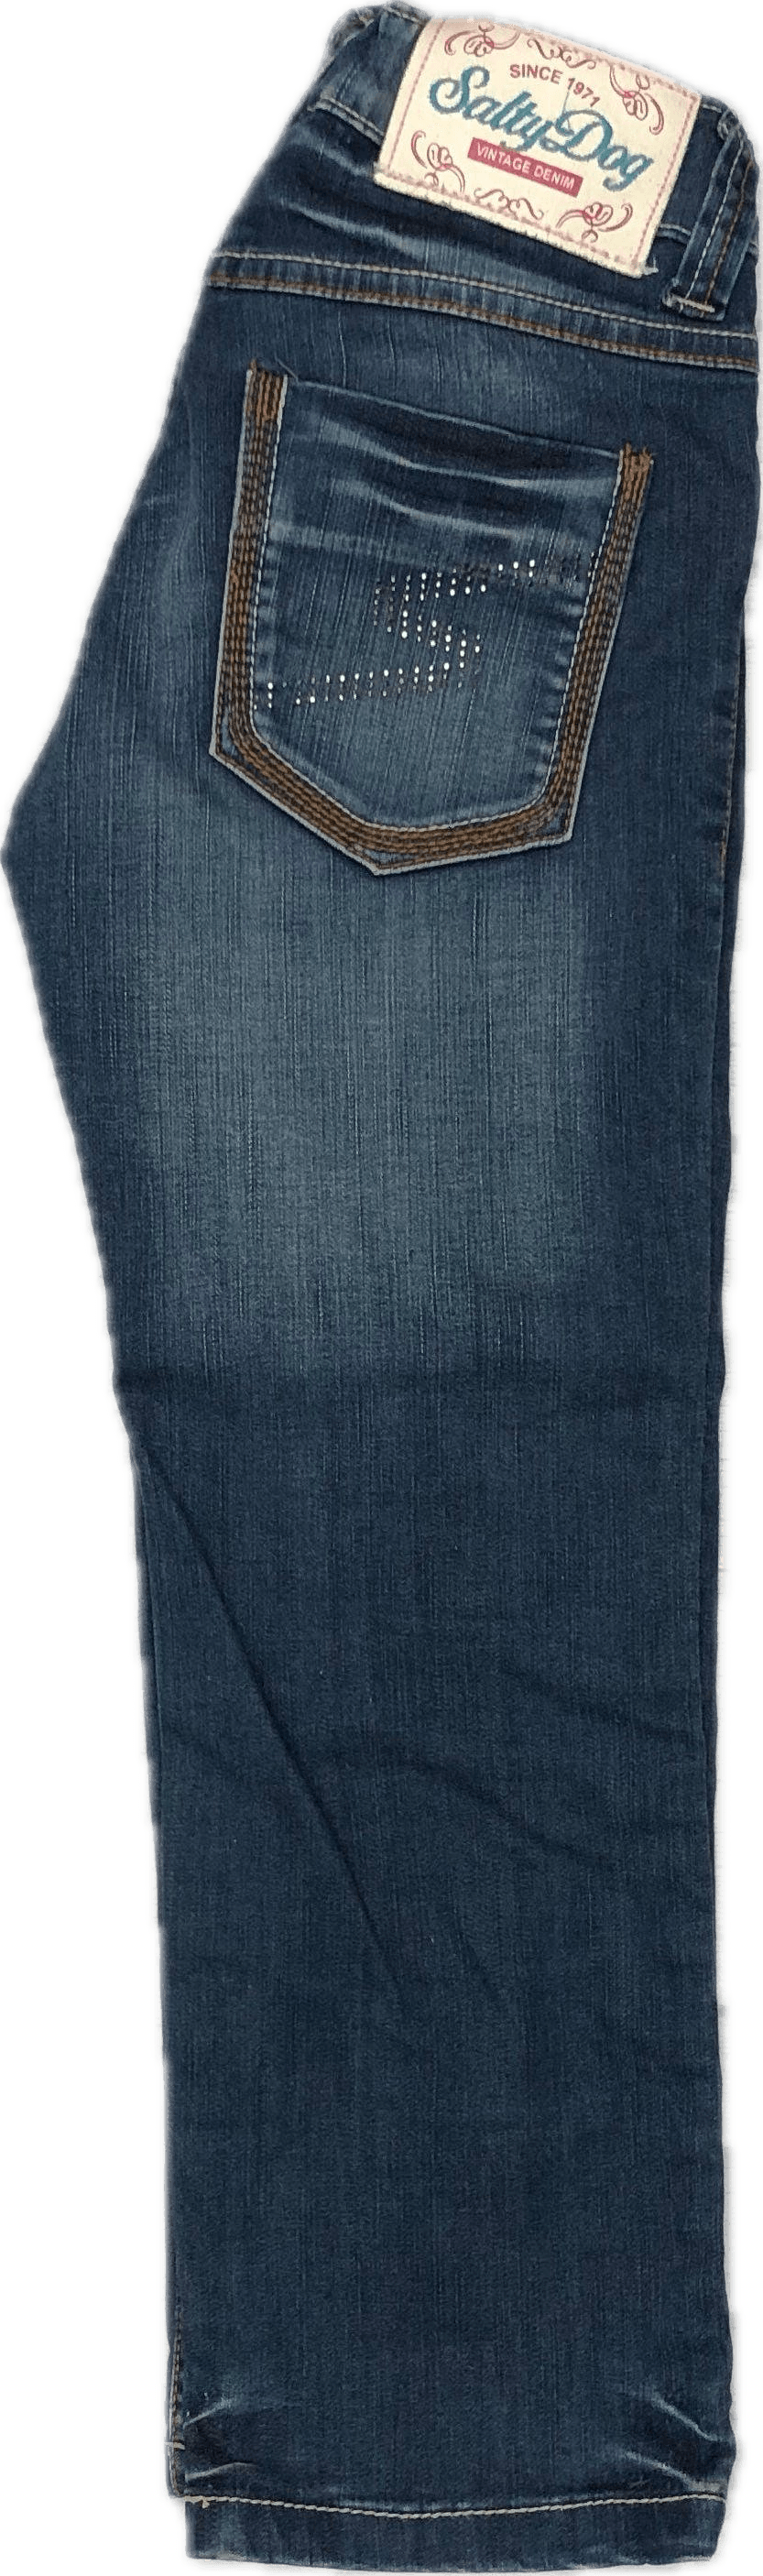 Dutch Salty Dog Girls Distressed Crop Jeans - Size 146 (10/11) - Jean Pool